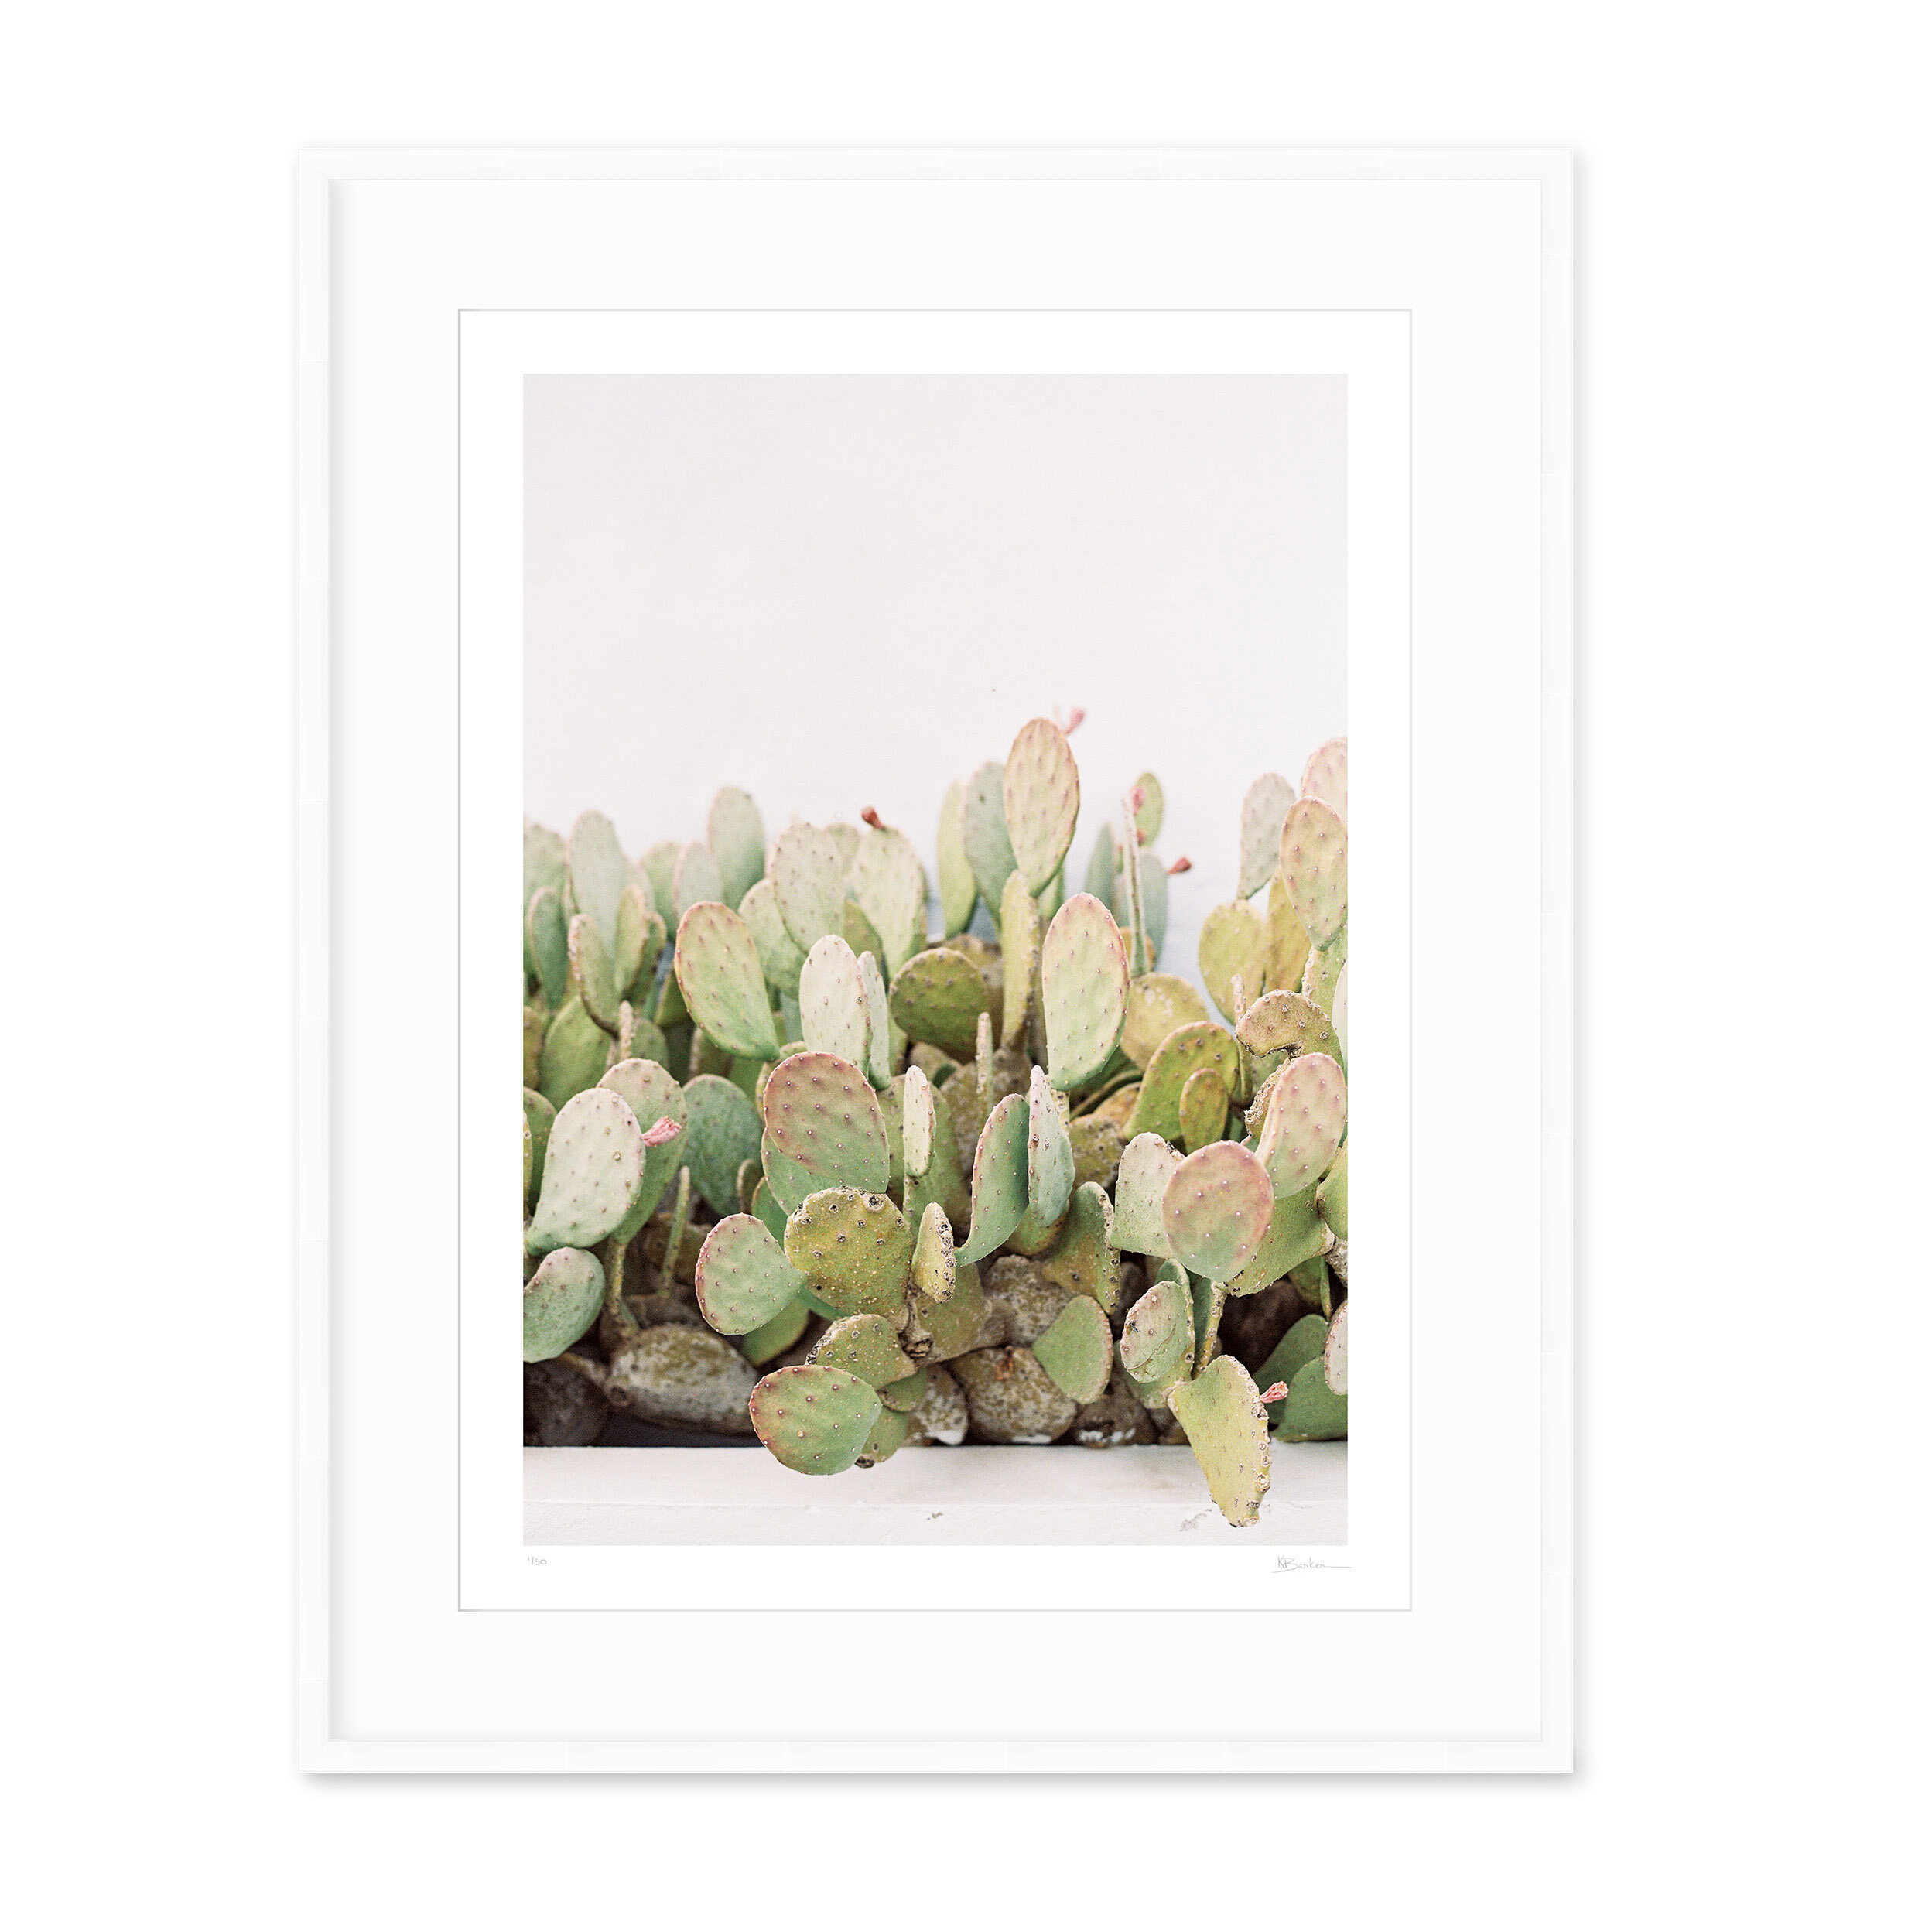 Kayla Barker Fine Art Photograph West Texas Cactus Wall White Frame.jpg